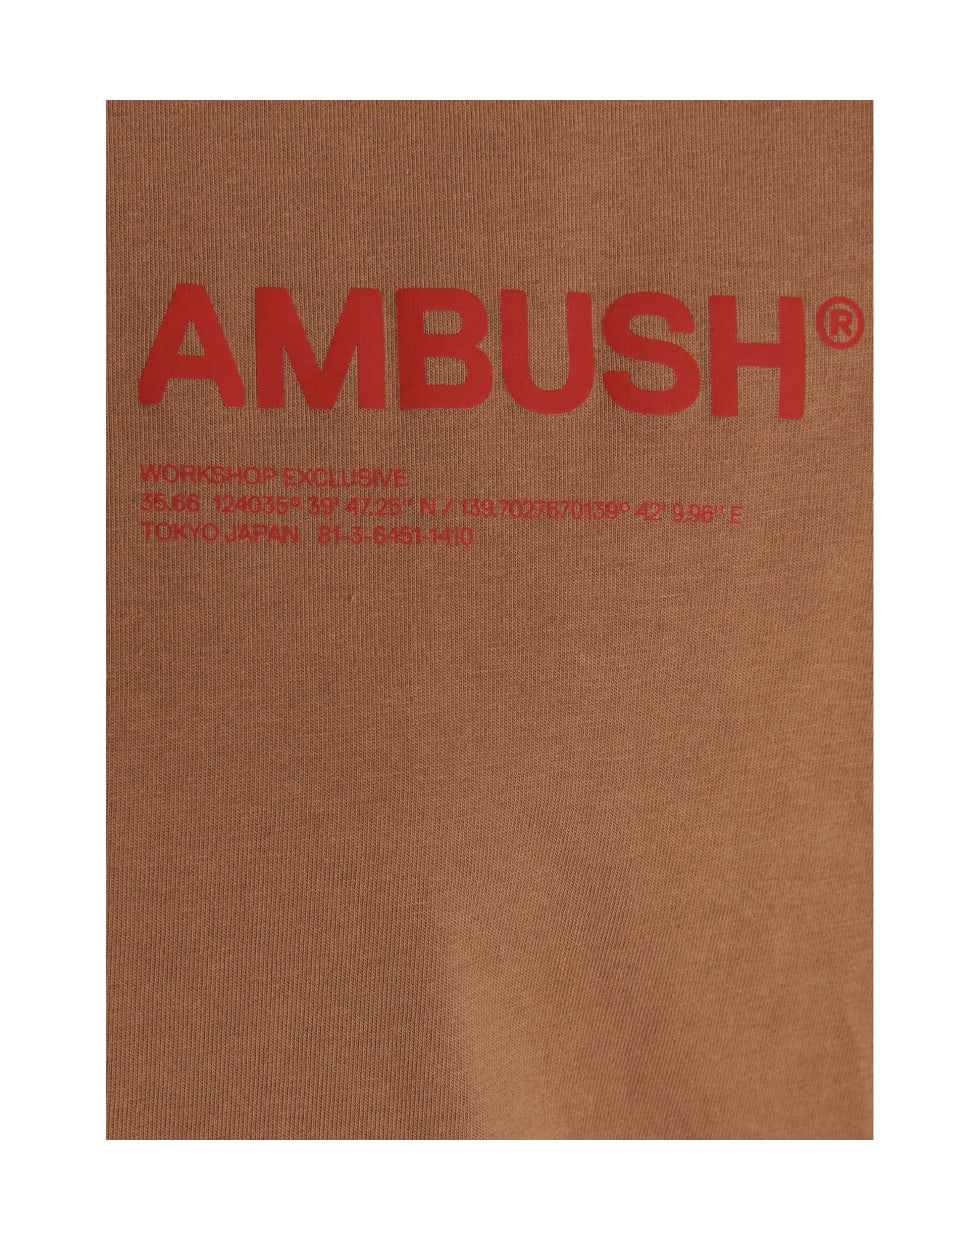 AMBUSH Logo 'workshop' T-shirt - Beige